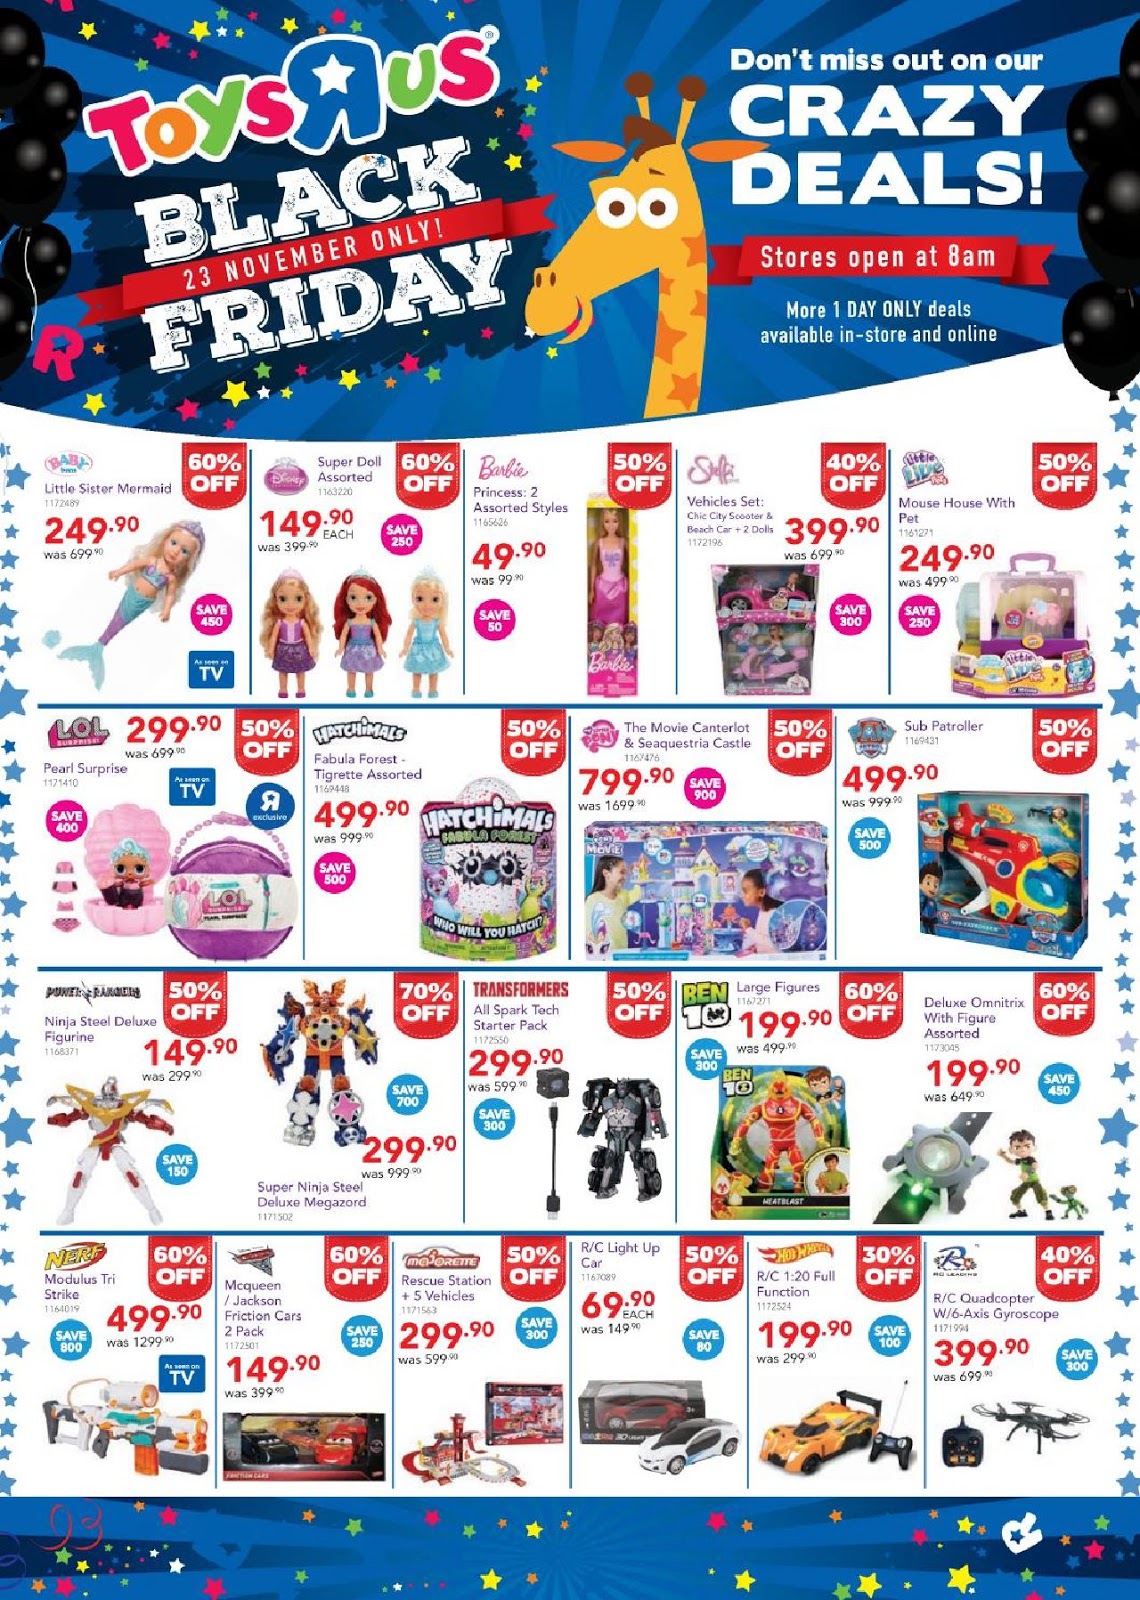 Toys R Us Black Friday Deals, Ads, Sale, special 2019 #BlackFriday - Will Toys R Us Black Friday Deals Available Online